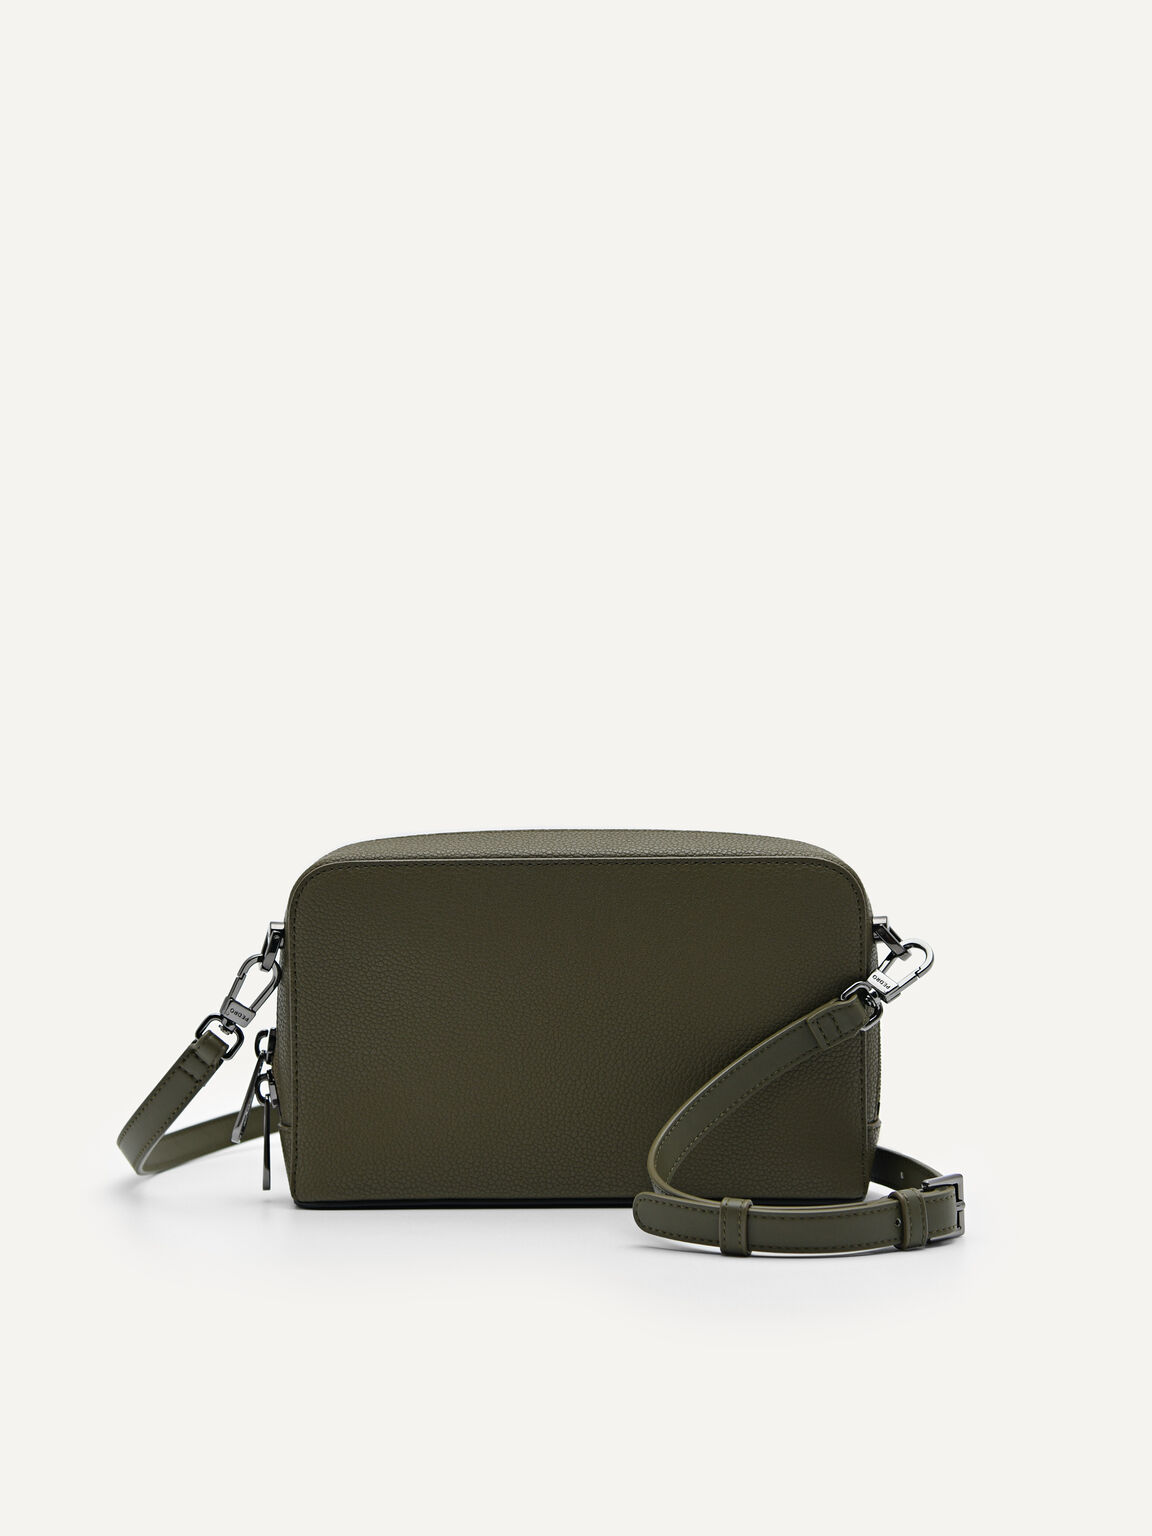 Túi cầm tay chữ nhật Embossed Leather, Xanh Olive, hi-res